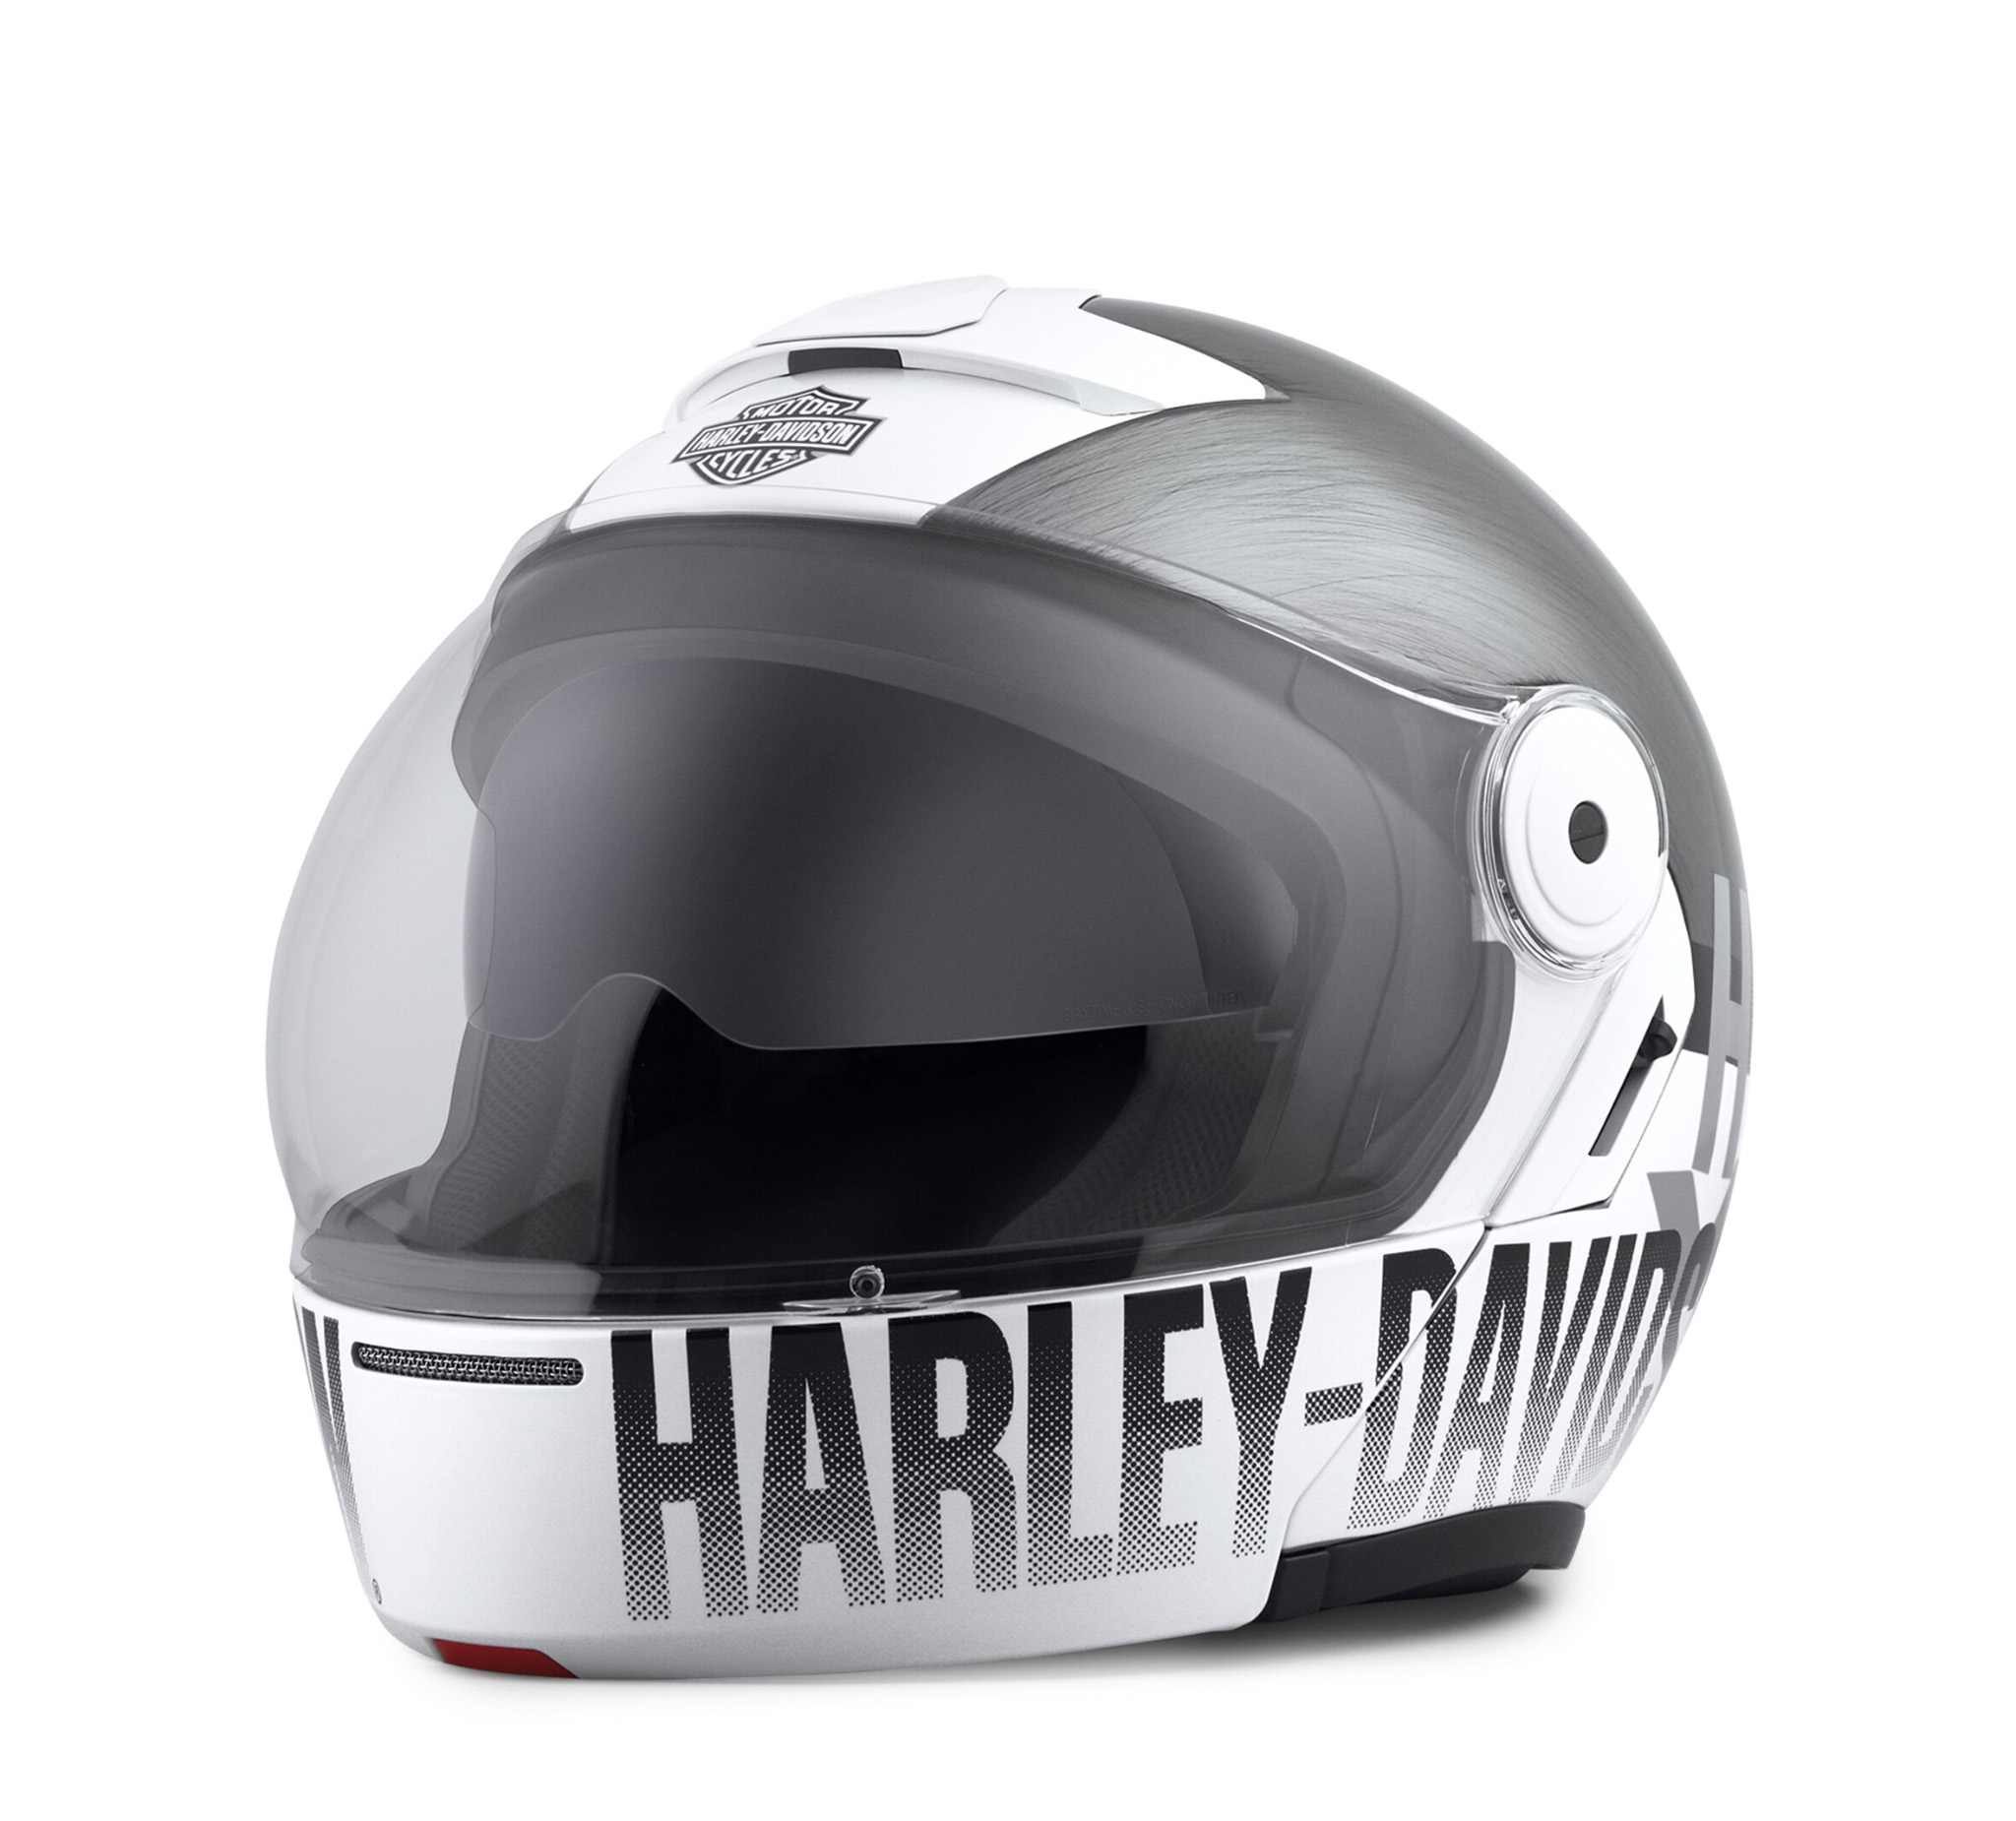 Vanocker J08 Modular Helmet 98101 20vx Harley Davidson Indonesia